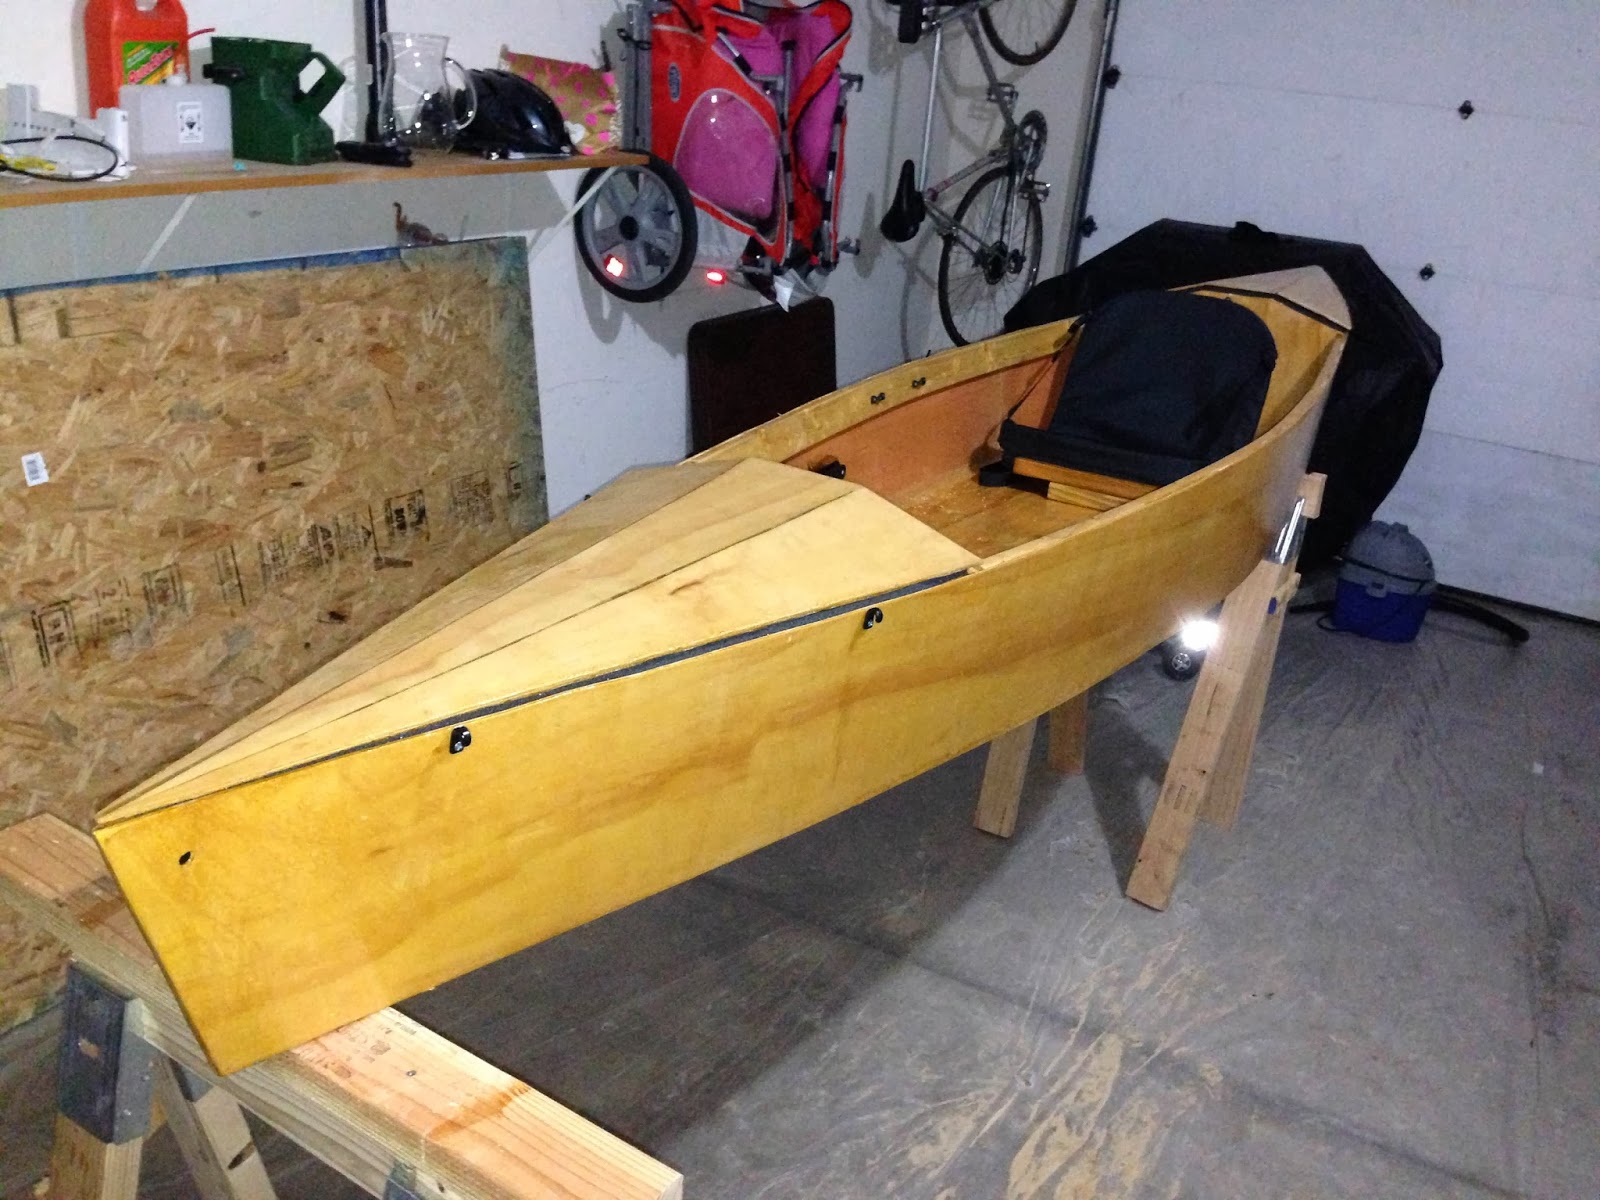 Drew's Projects: Stitch and glue kayak